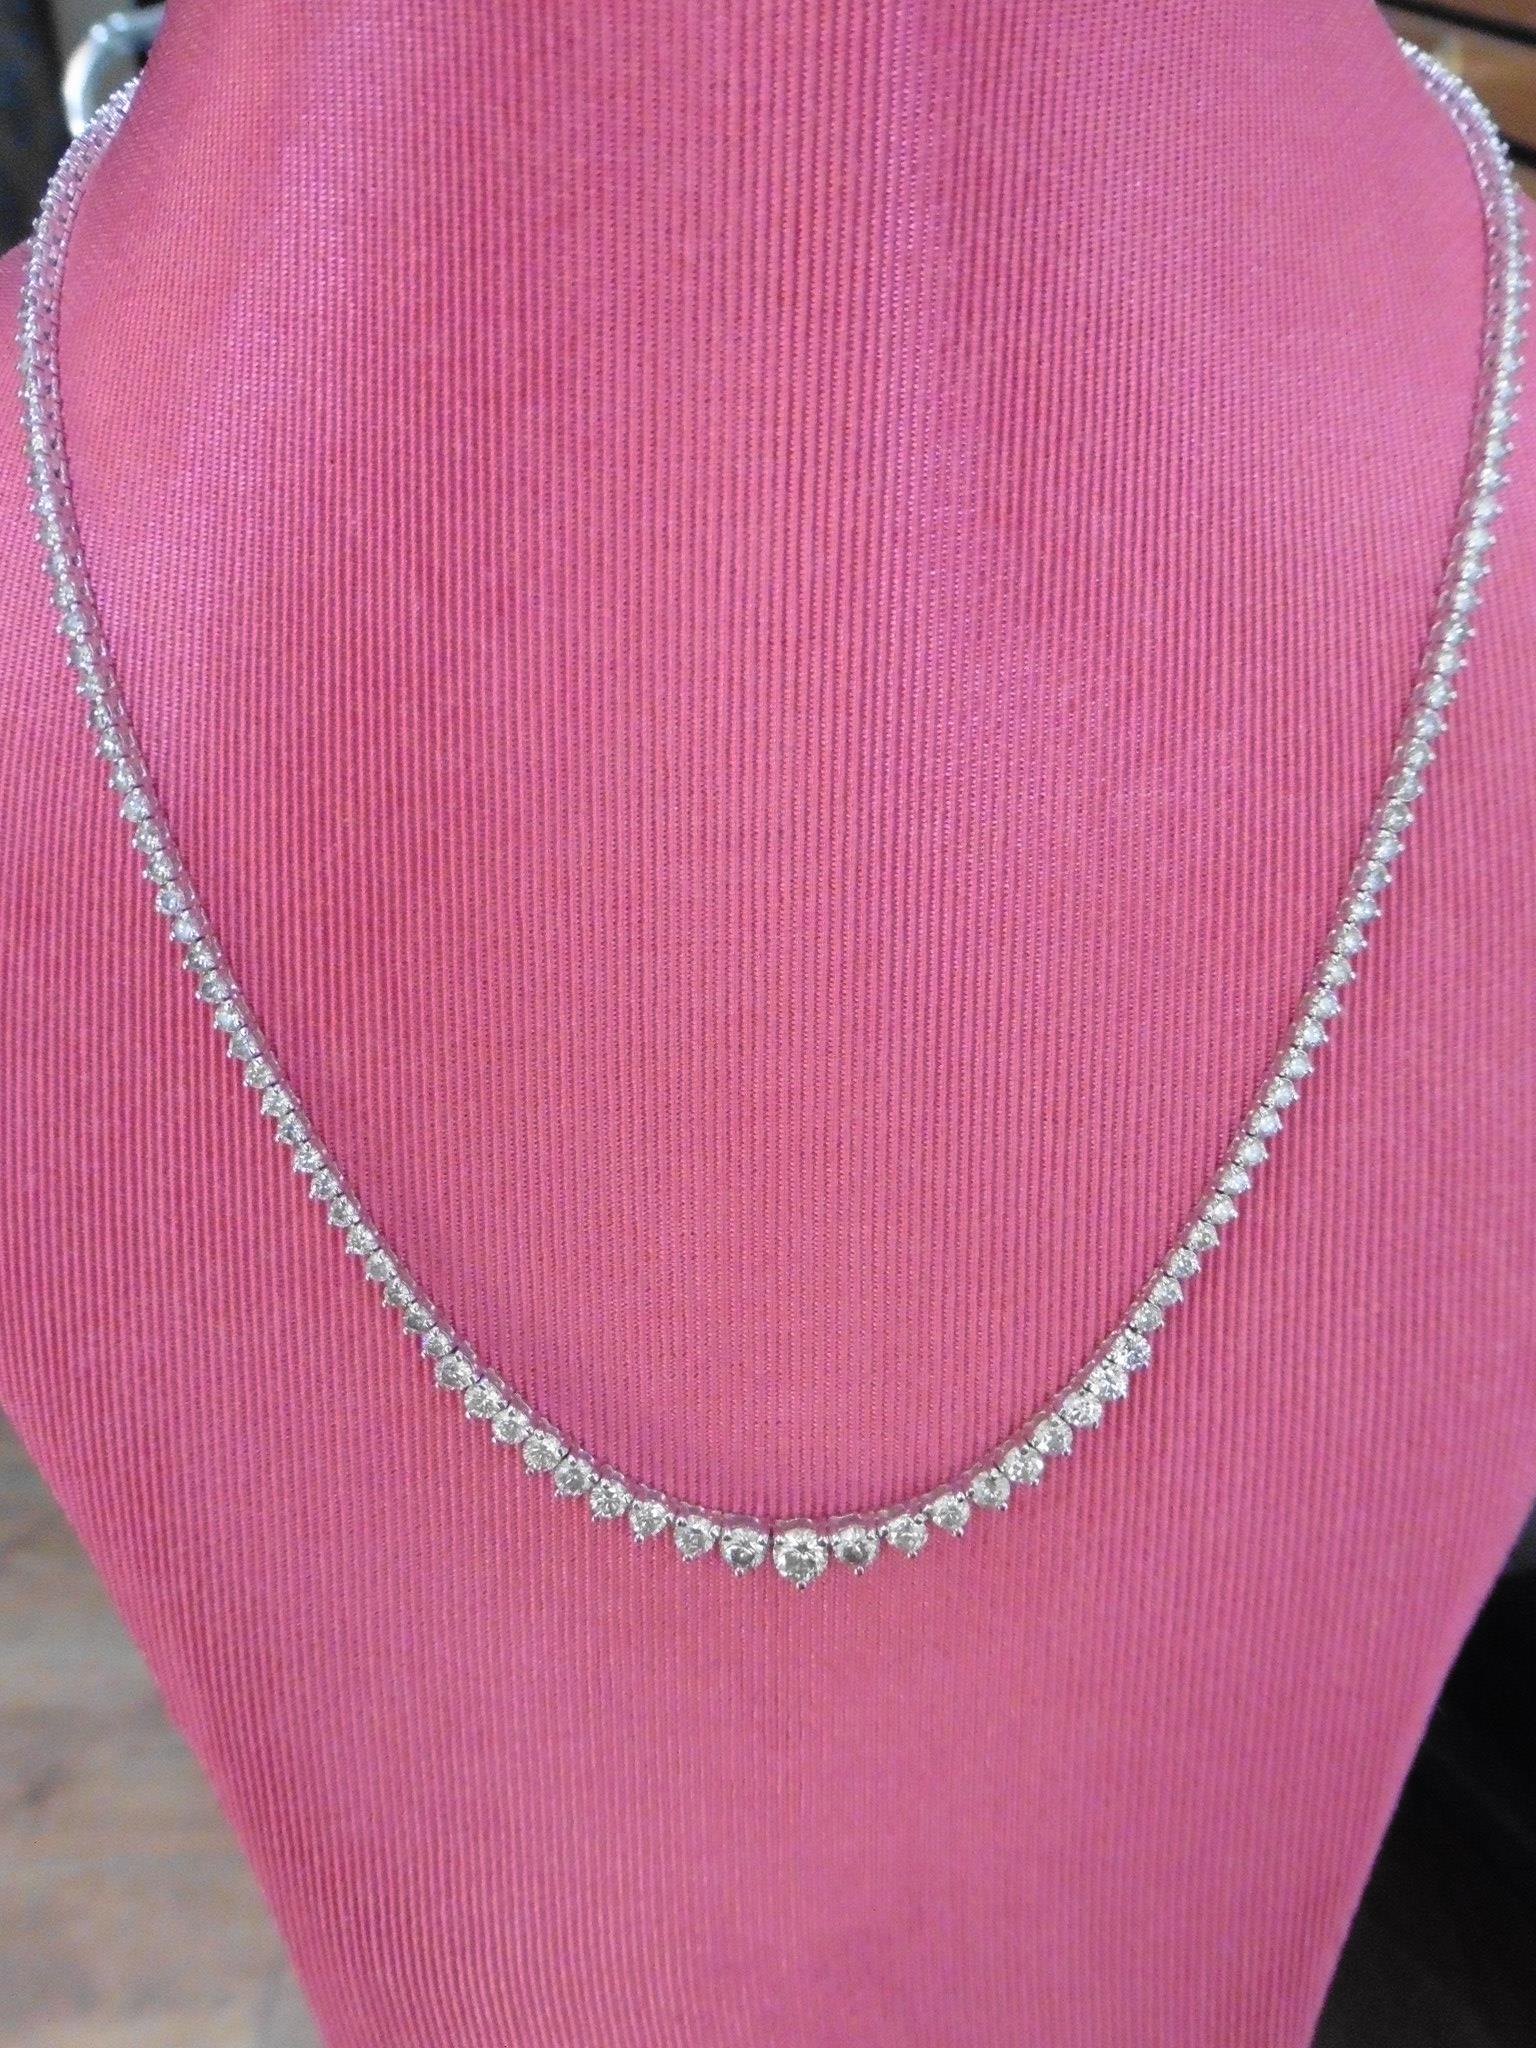 11.75ct Diamond tennis style necklace. 3 claw setting. Graduated diamonds, I colour, Si2 clarity